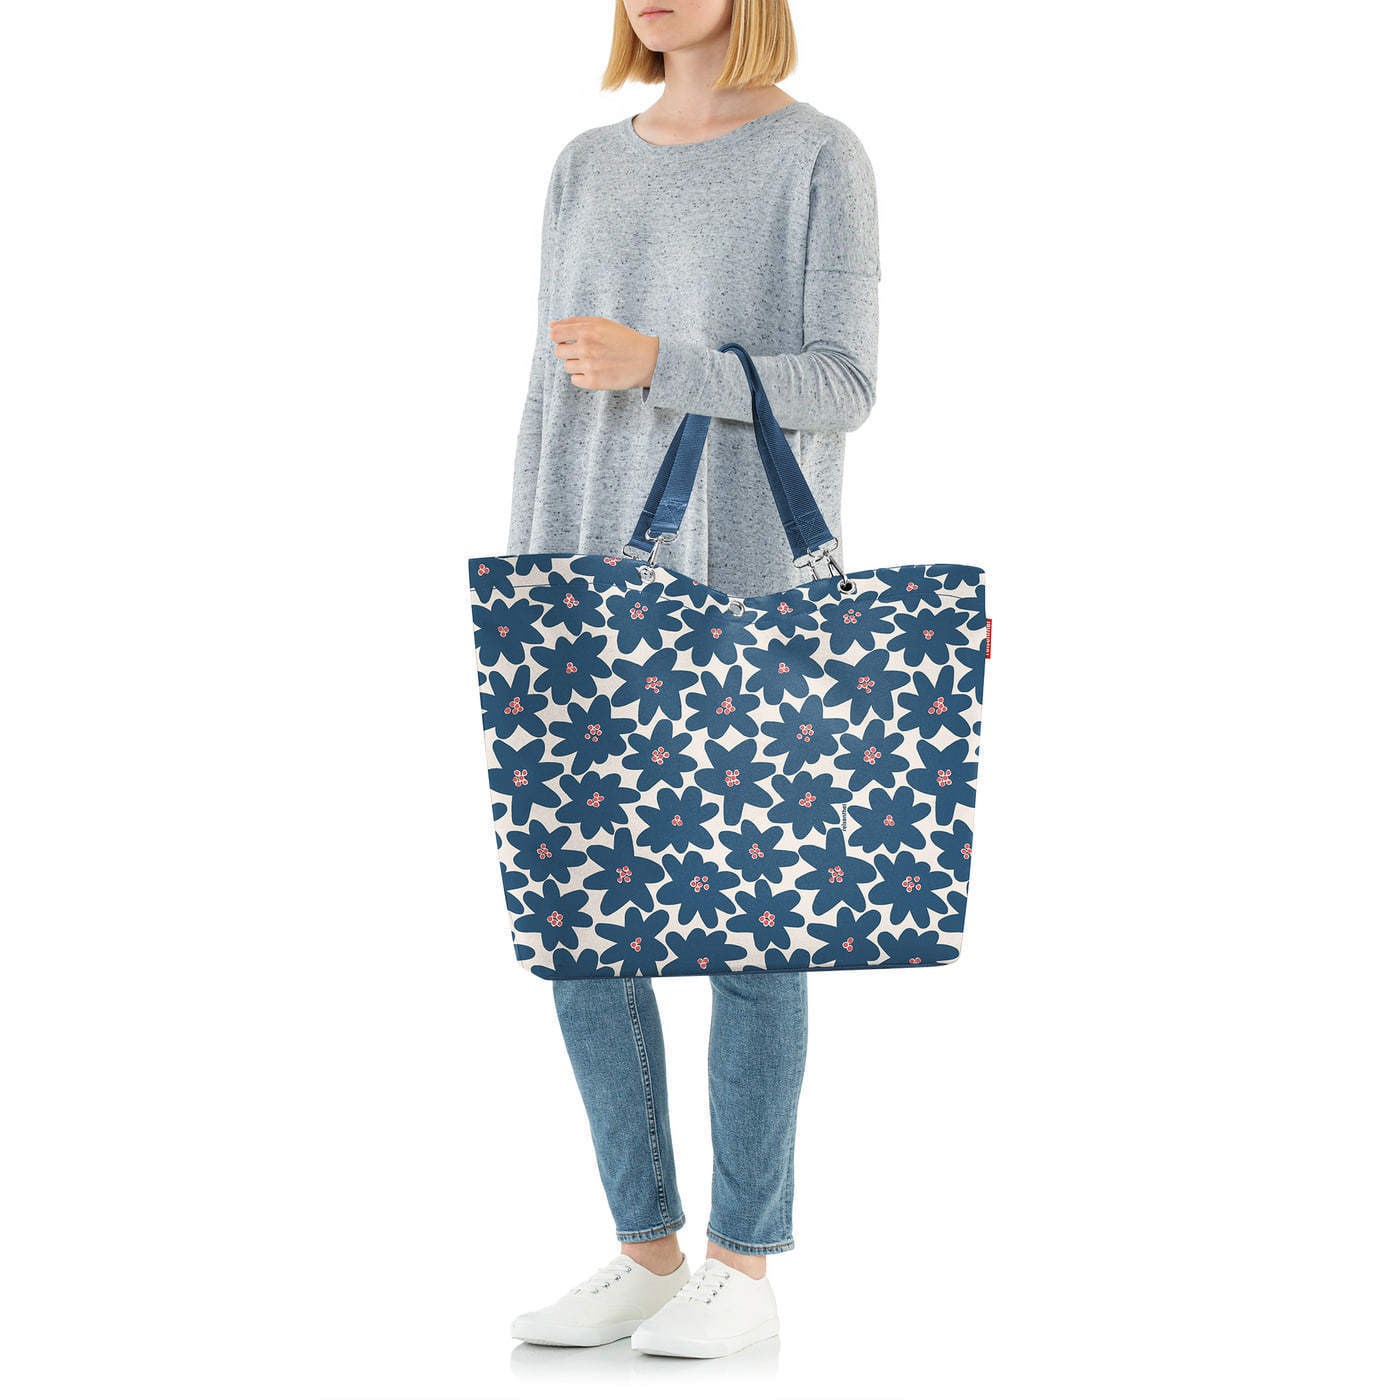 Taška přes rameno Shopper XL daisy blue_4